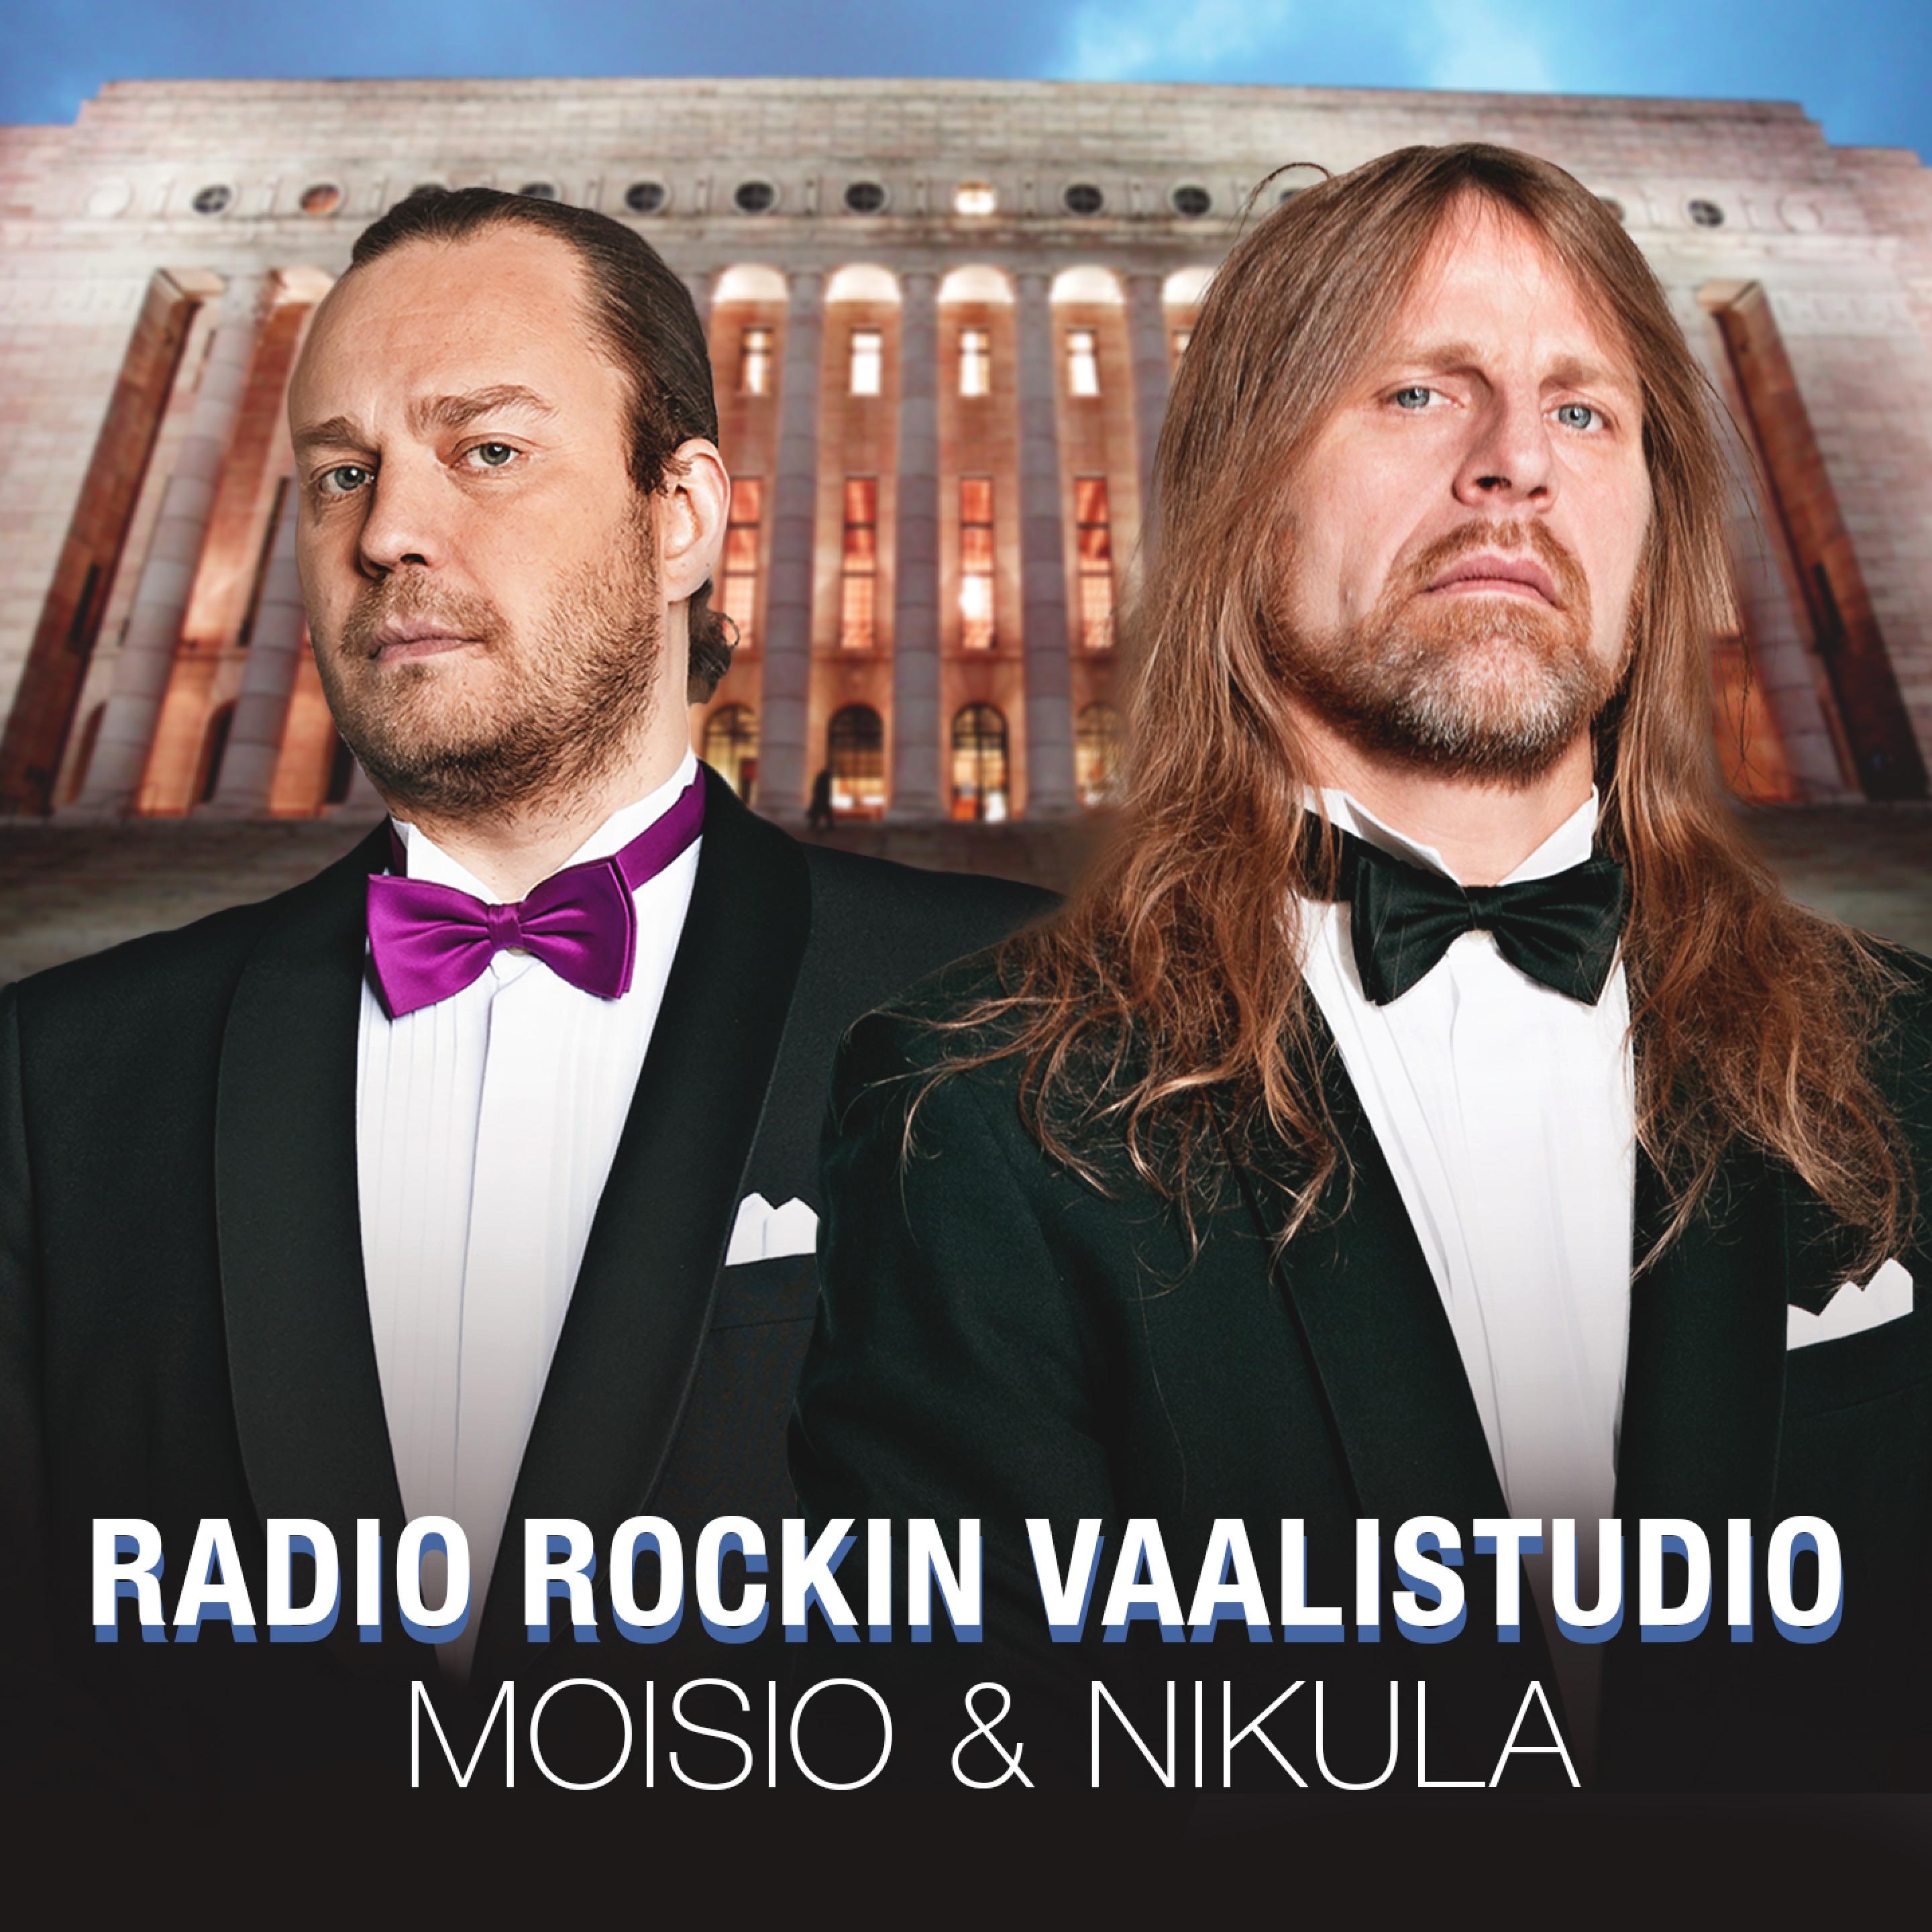 Radio Rockin vaalistudio - Moisio & Nikula - podcast